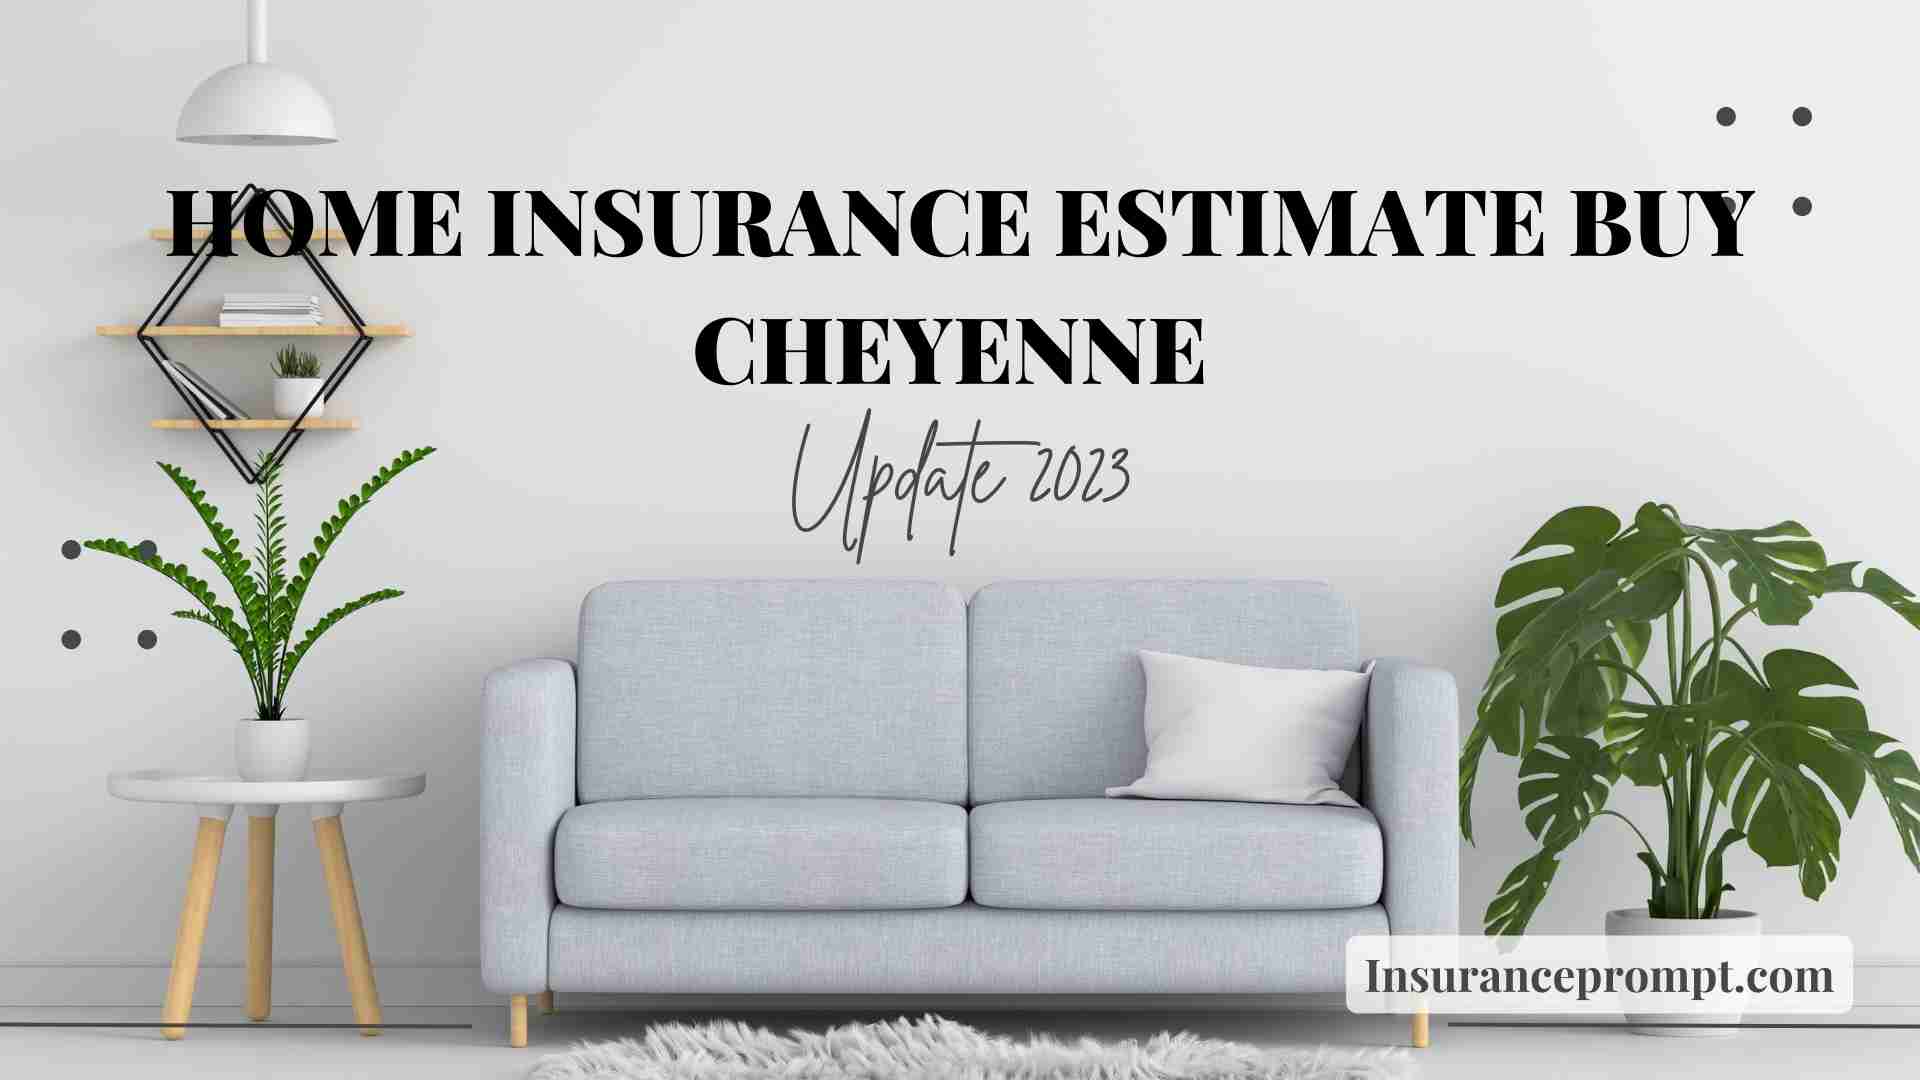 Home Insurance Estimate Buy Cheyenne: Ultimate Guide 2023